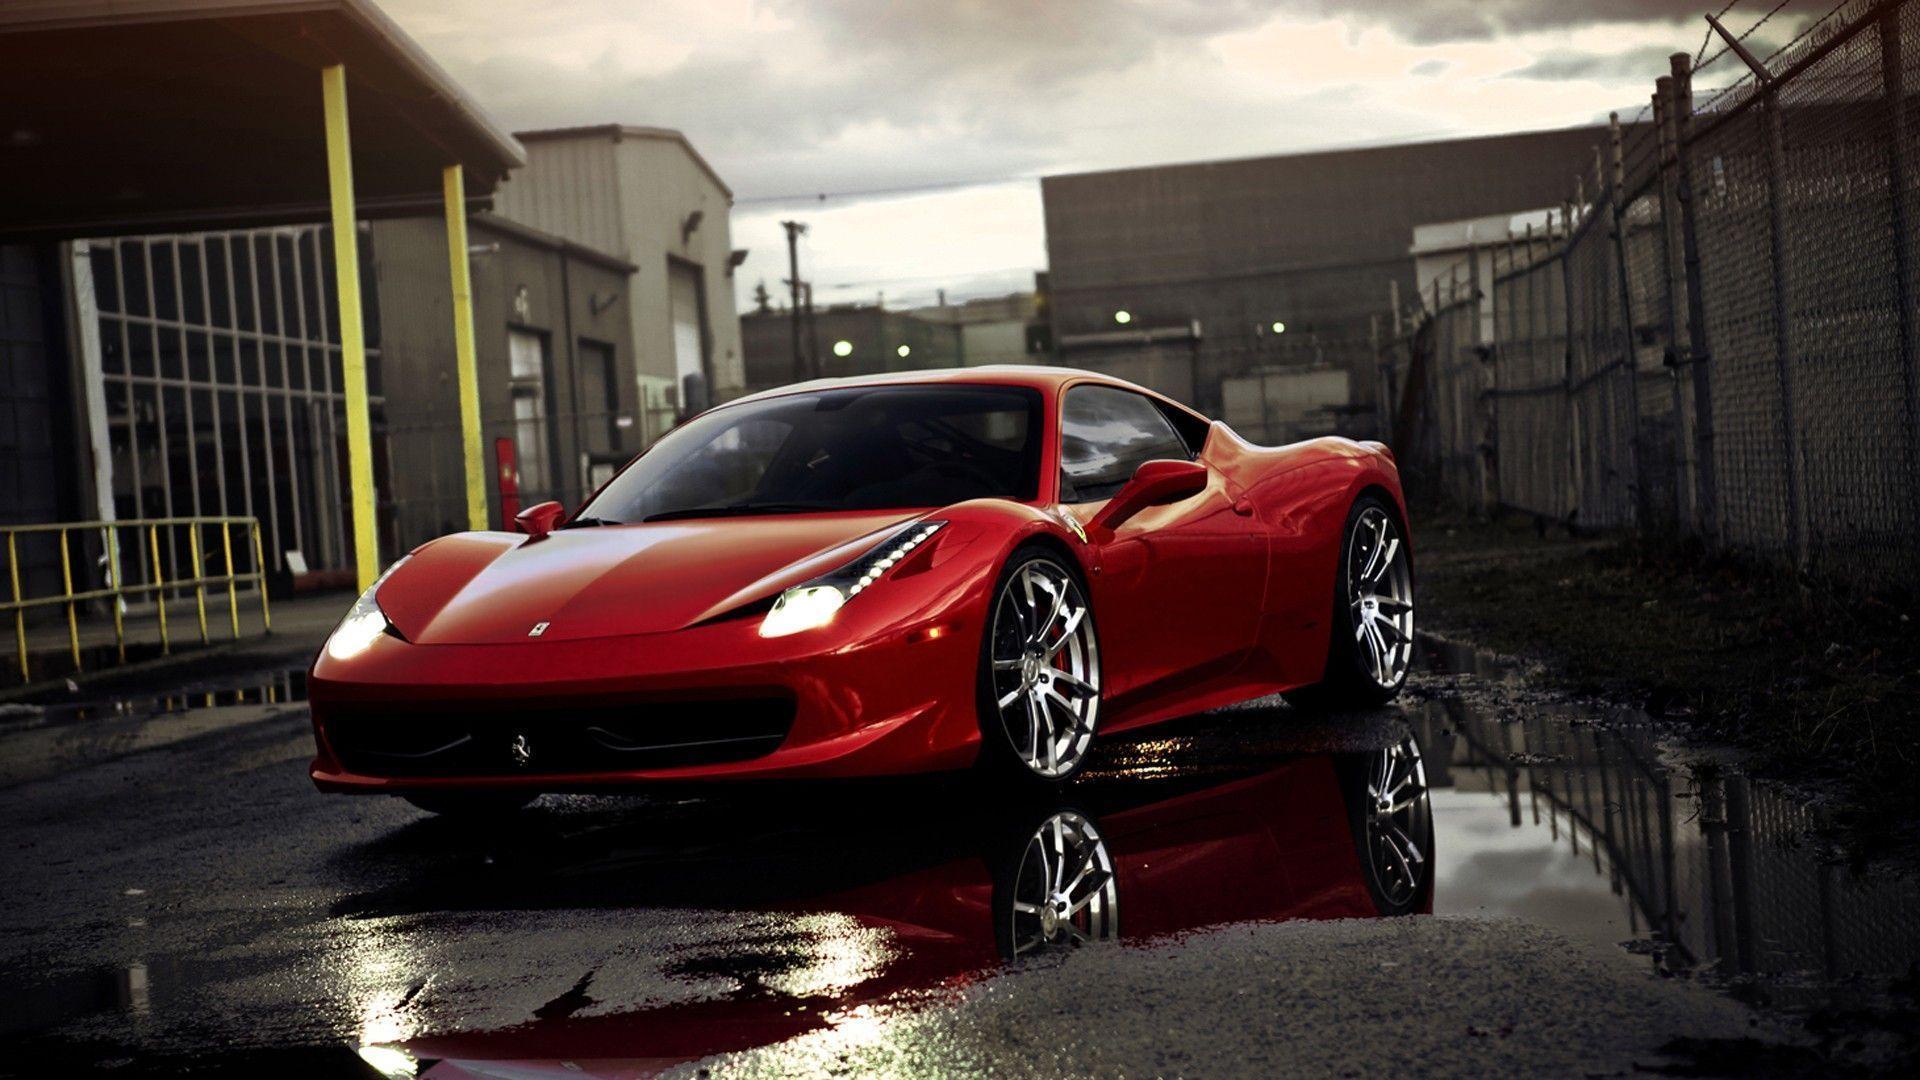 Best Ferrari Wallpaper HD New And Used Cars Online Wallpaper